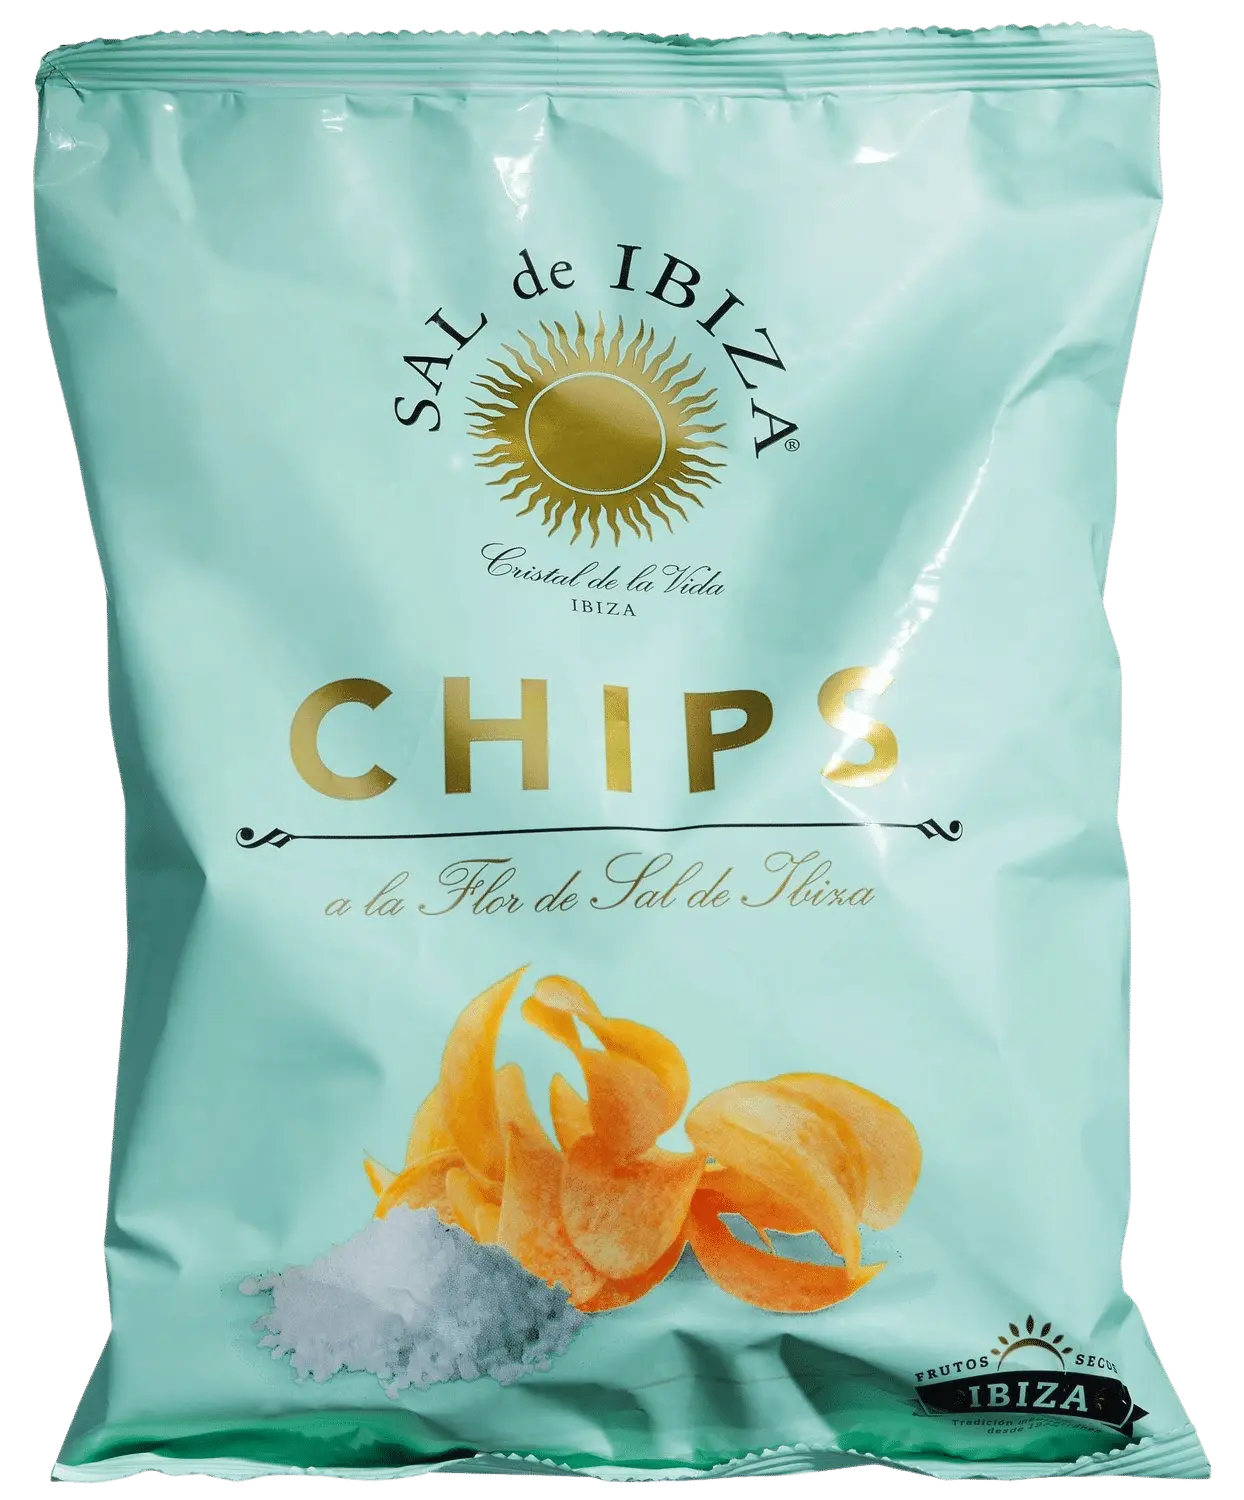 SAL DE IBIZA - Chips a la Flor de Sal de Ibiza - Kartoffelchips mit Sal de Ibiza